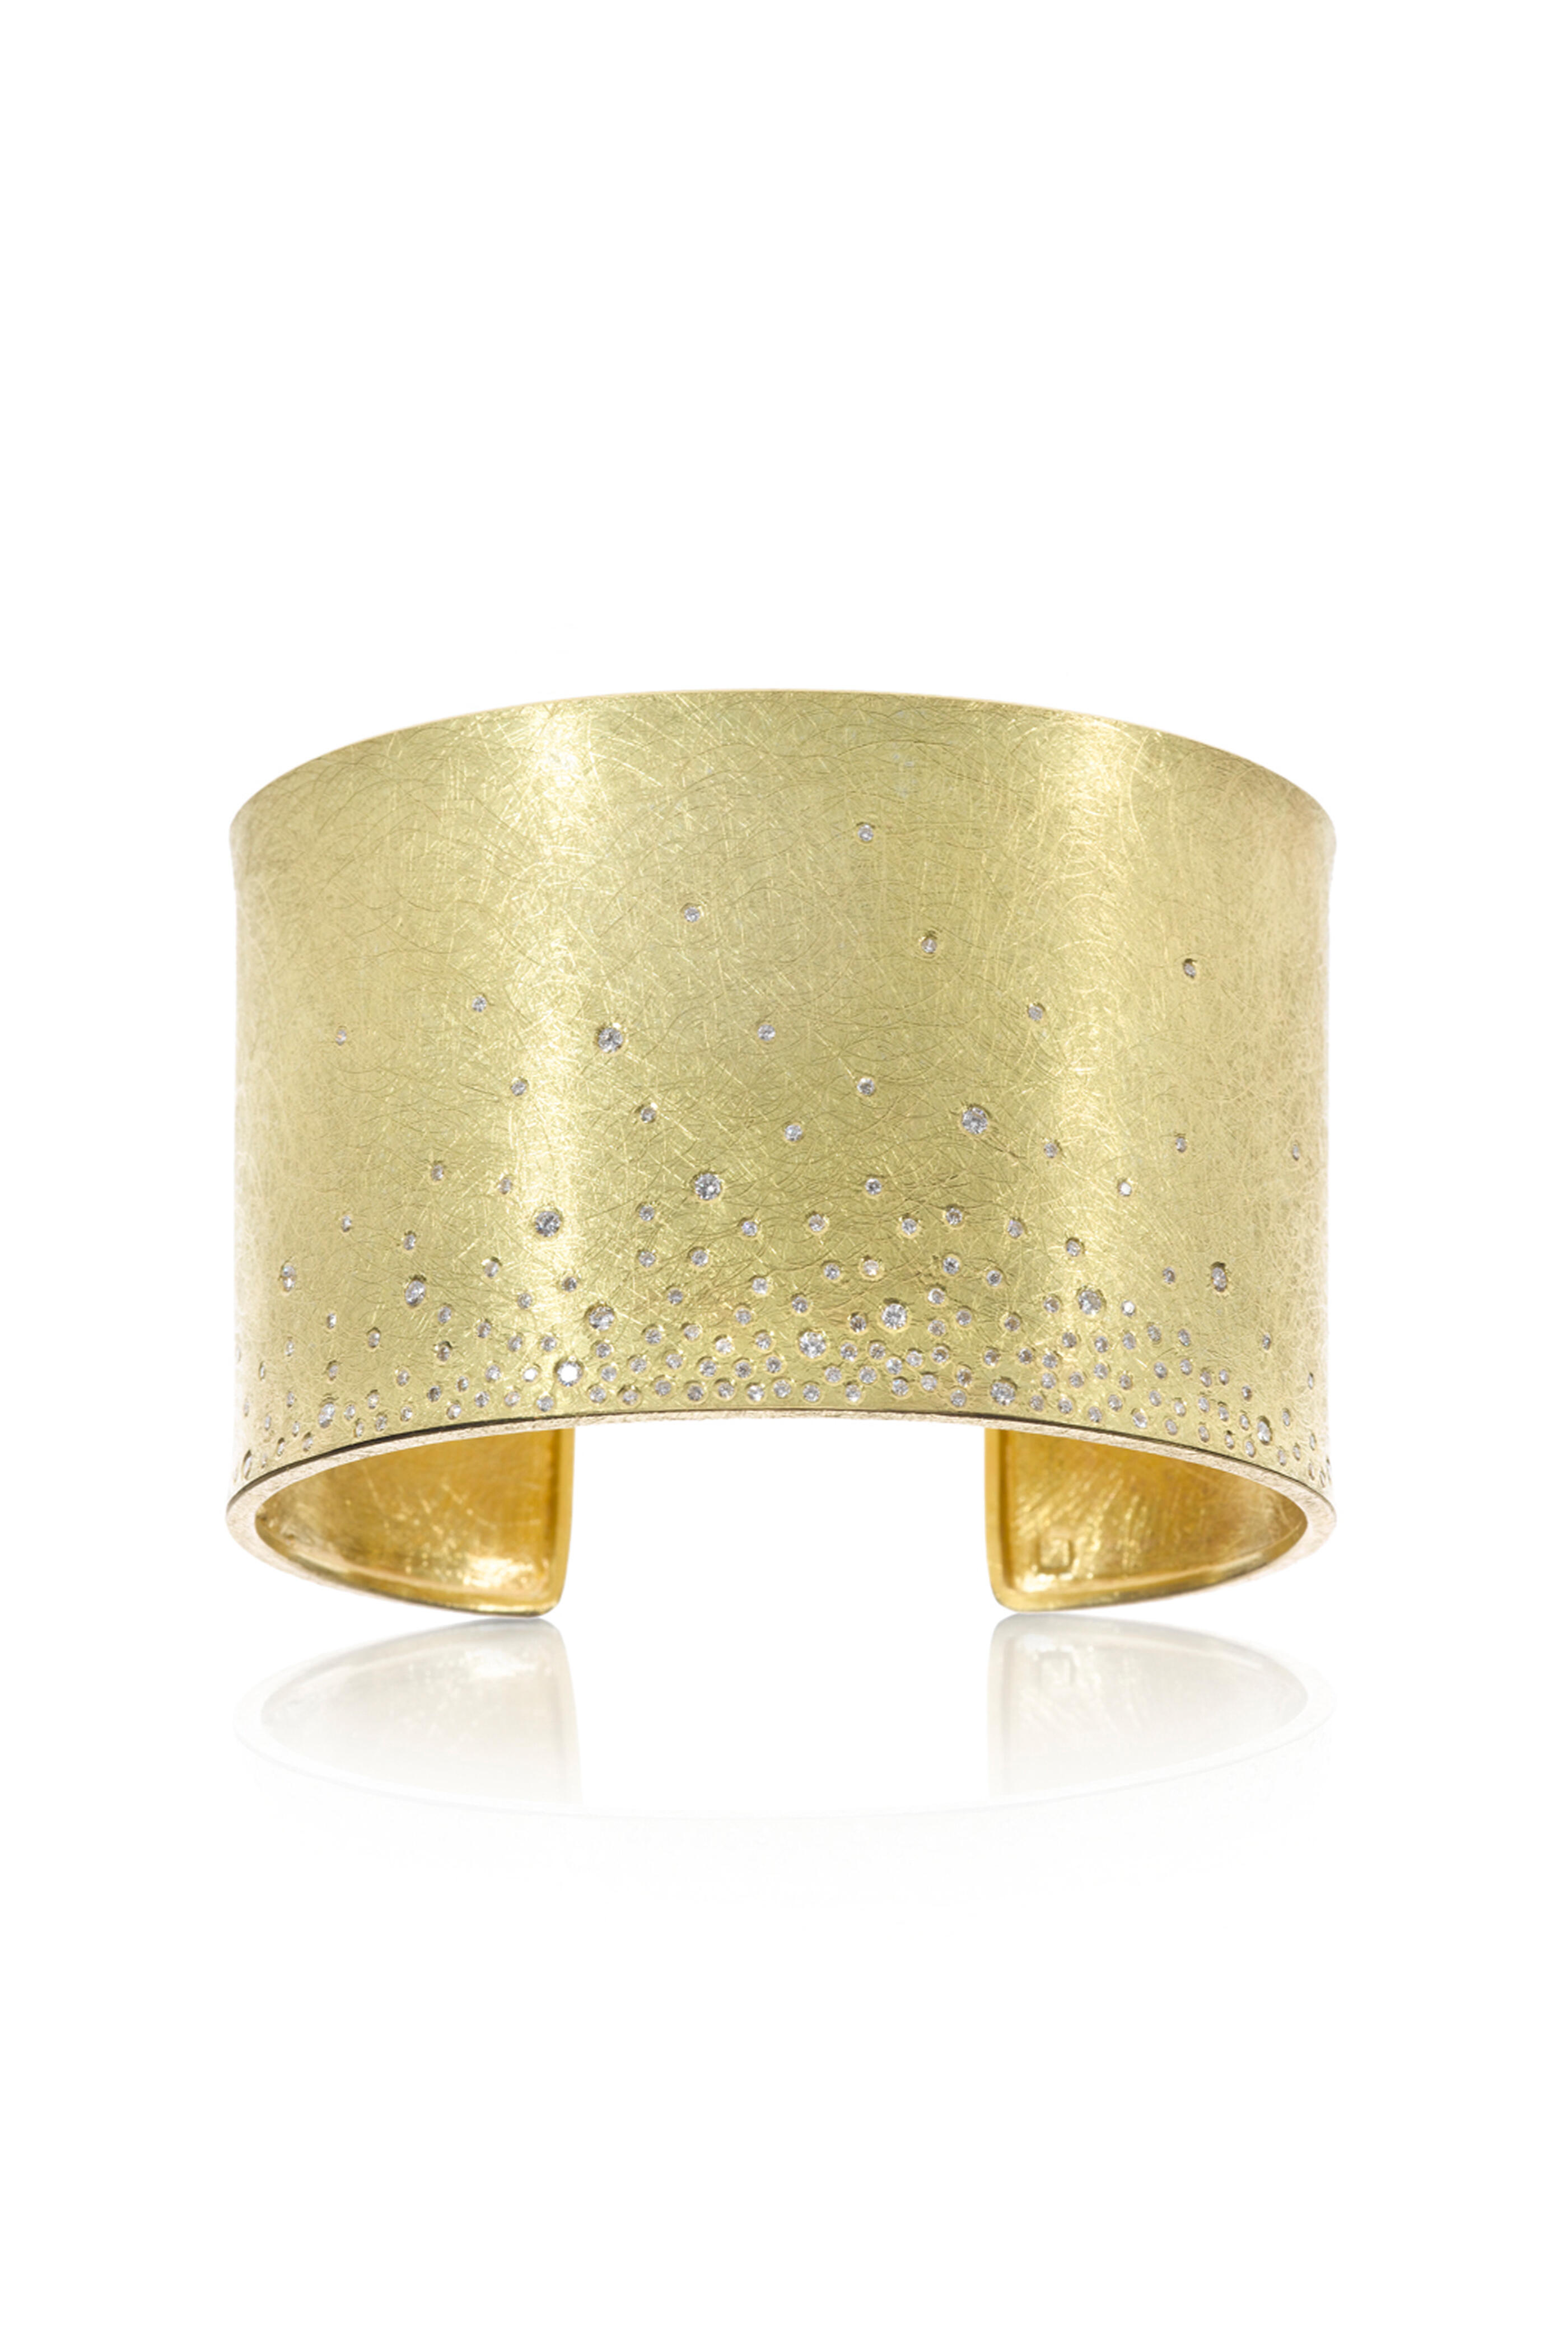 Todd Reed 18K Gold Scattered Diamond Bangle Bracelet